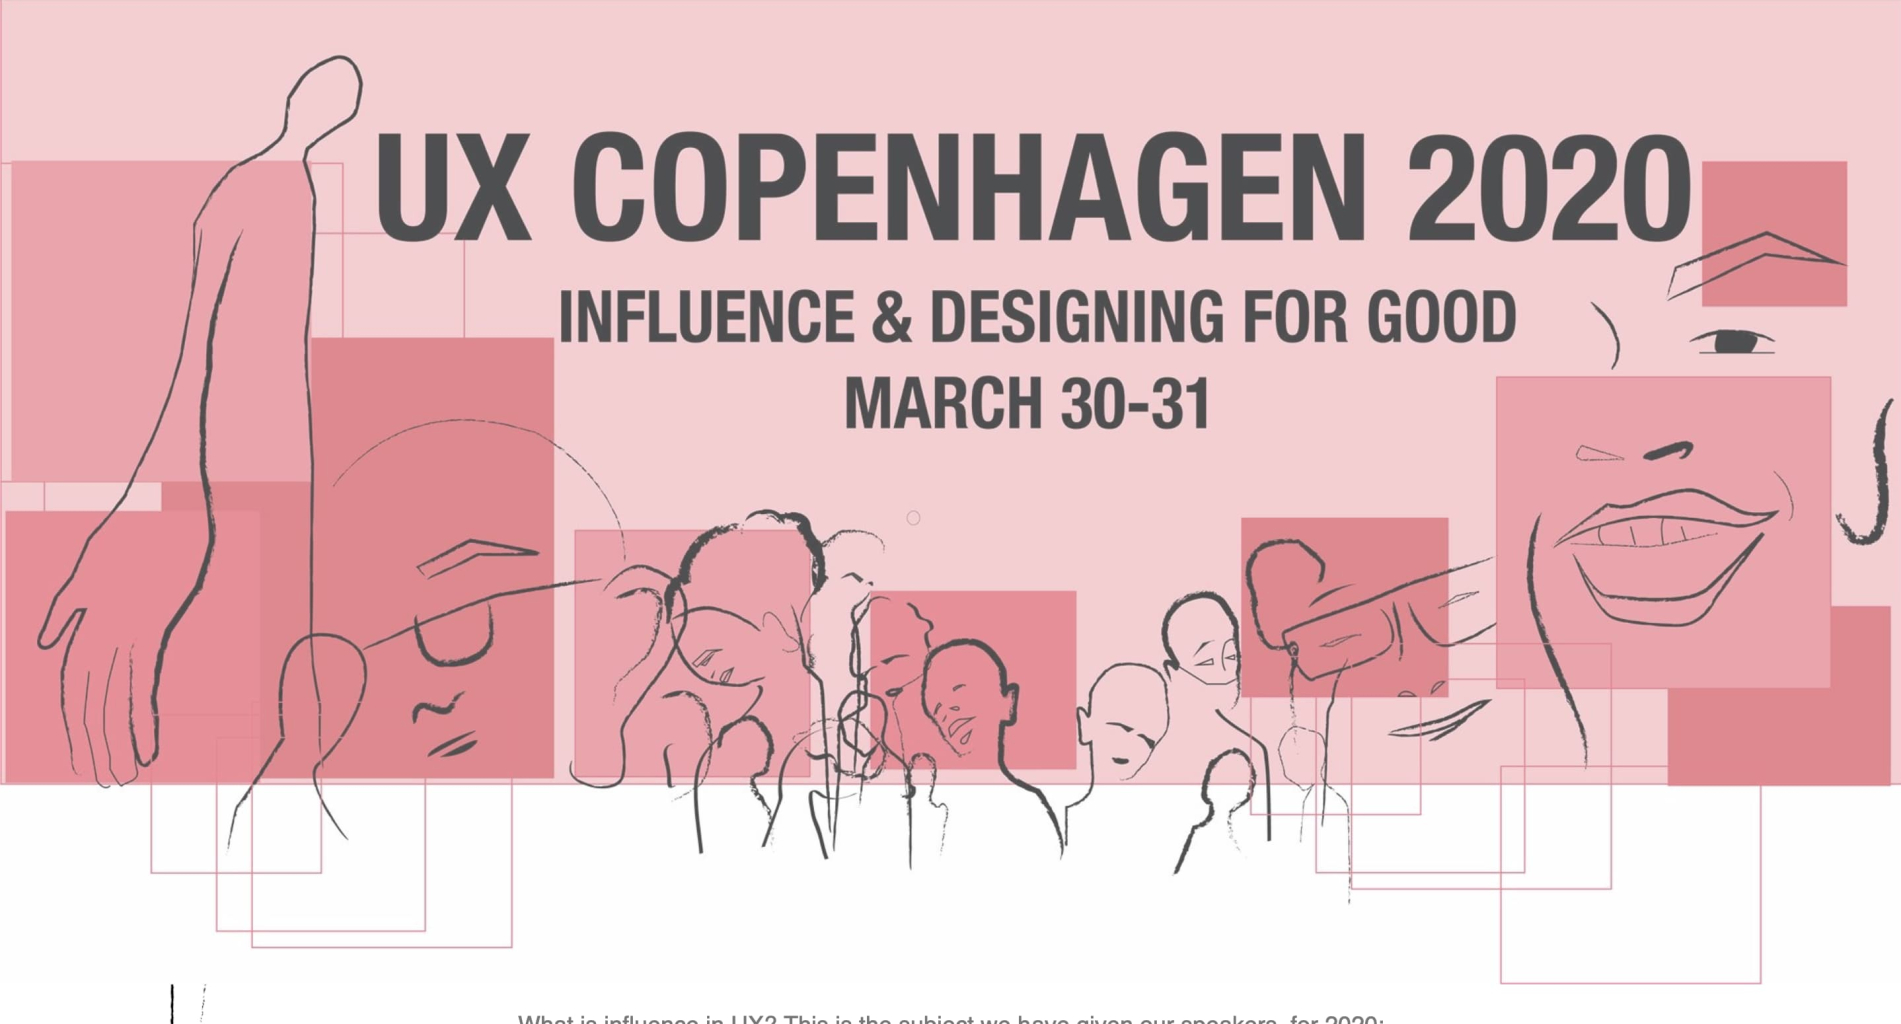 UX Copenhagen conference